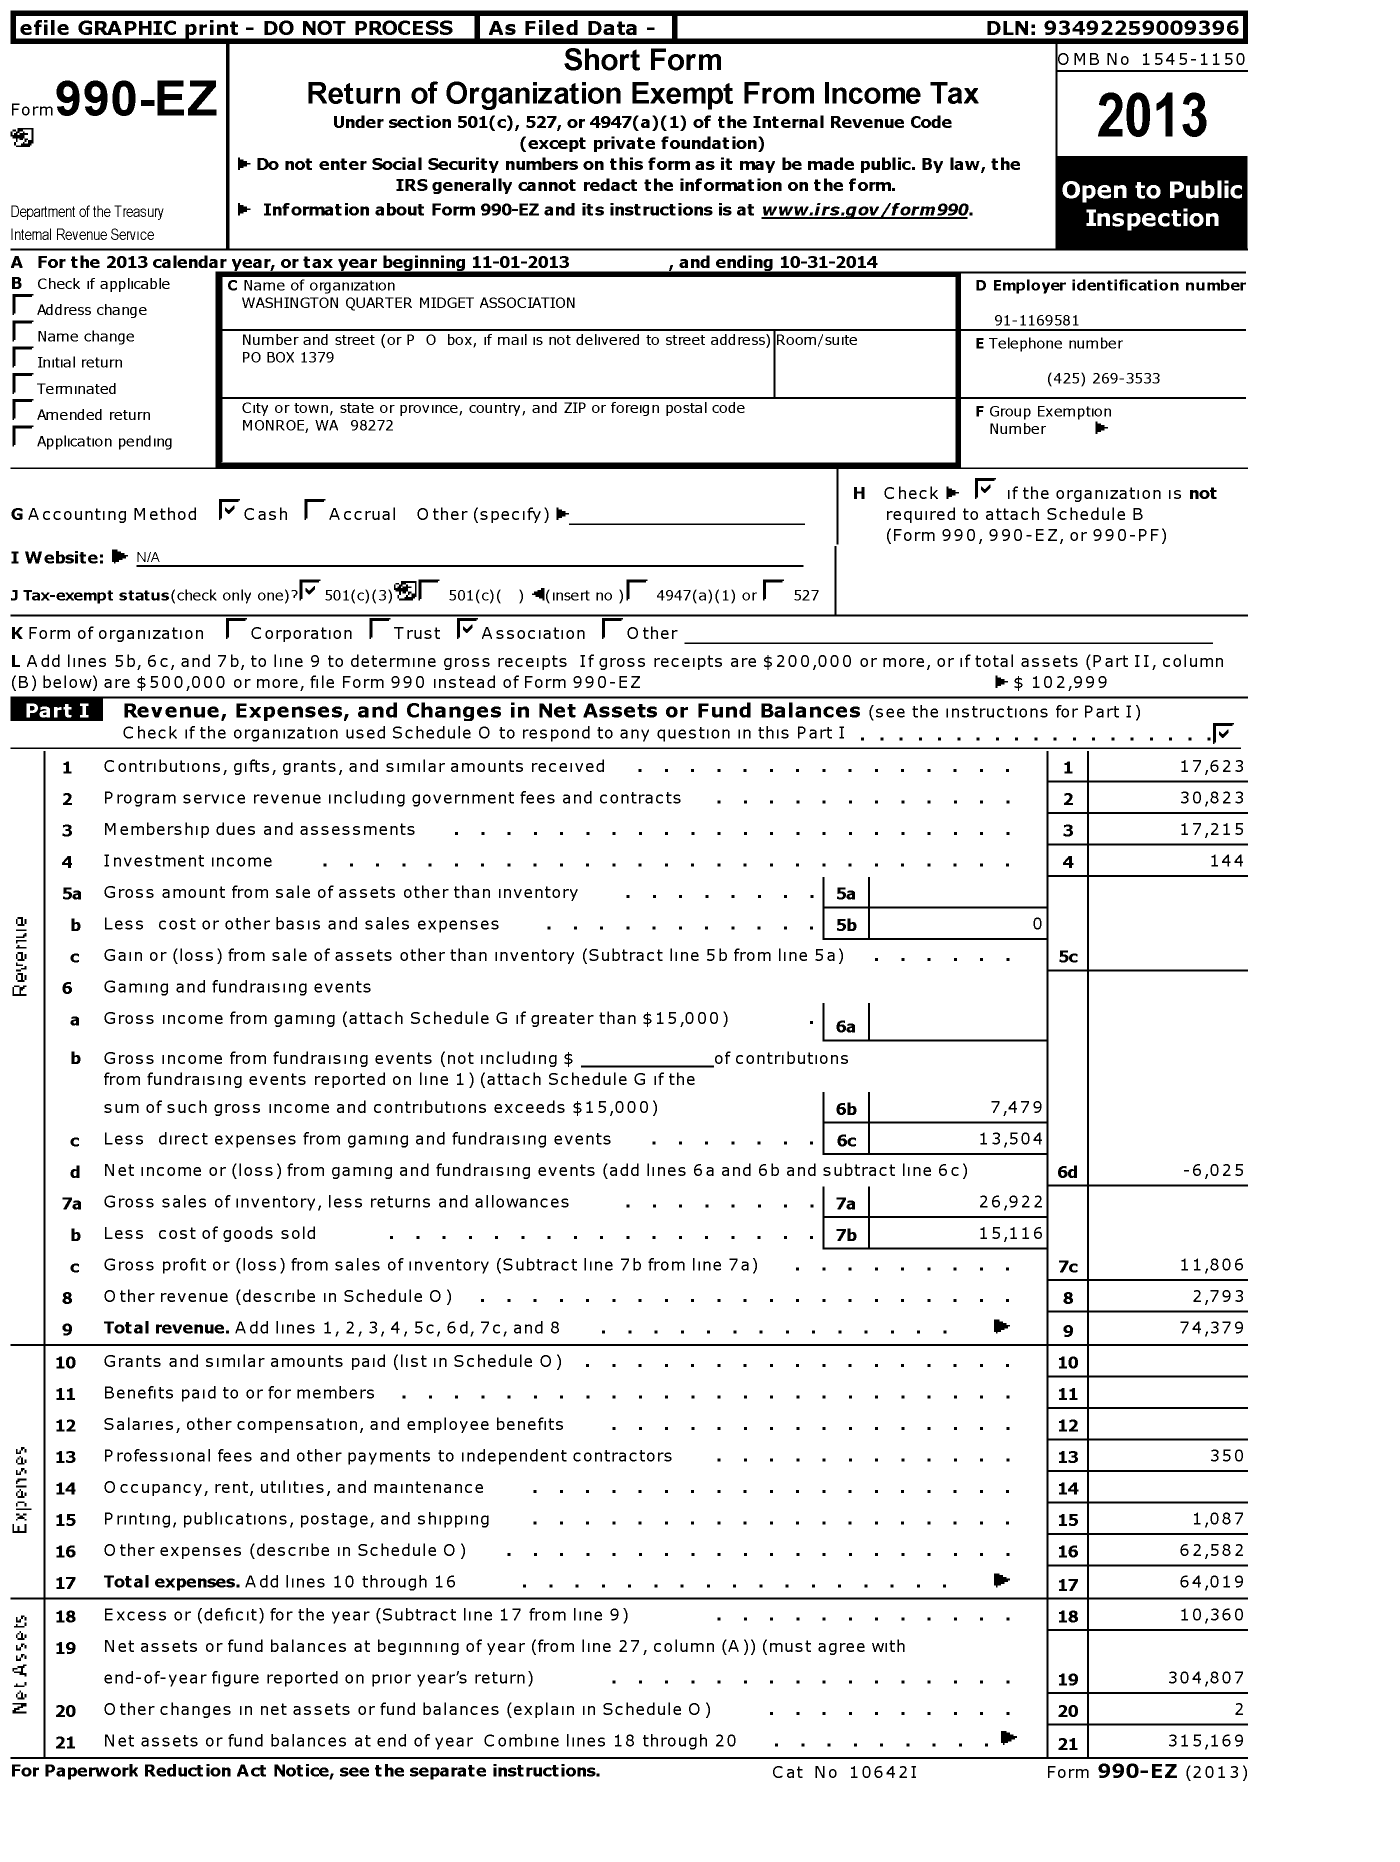 Image of first page of 2013 Form 990EZ for Washington Quarter Midget Association